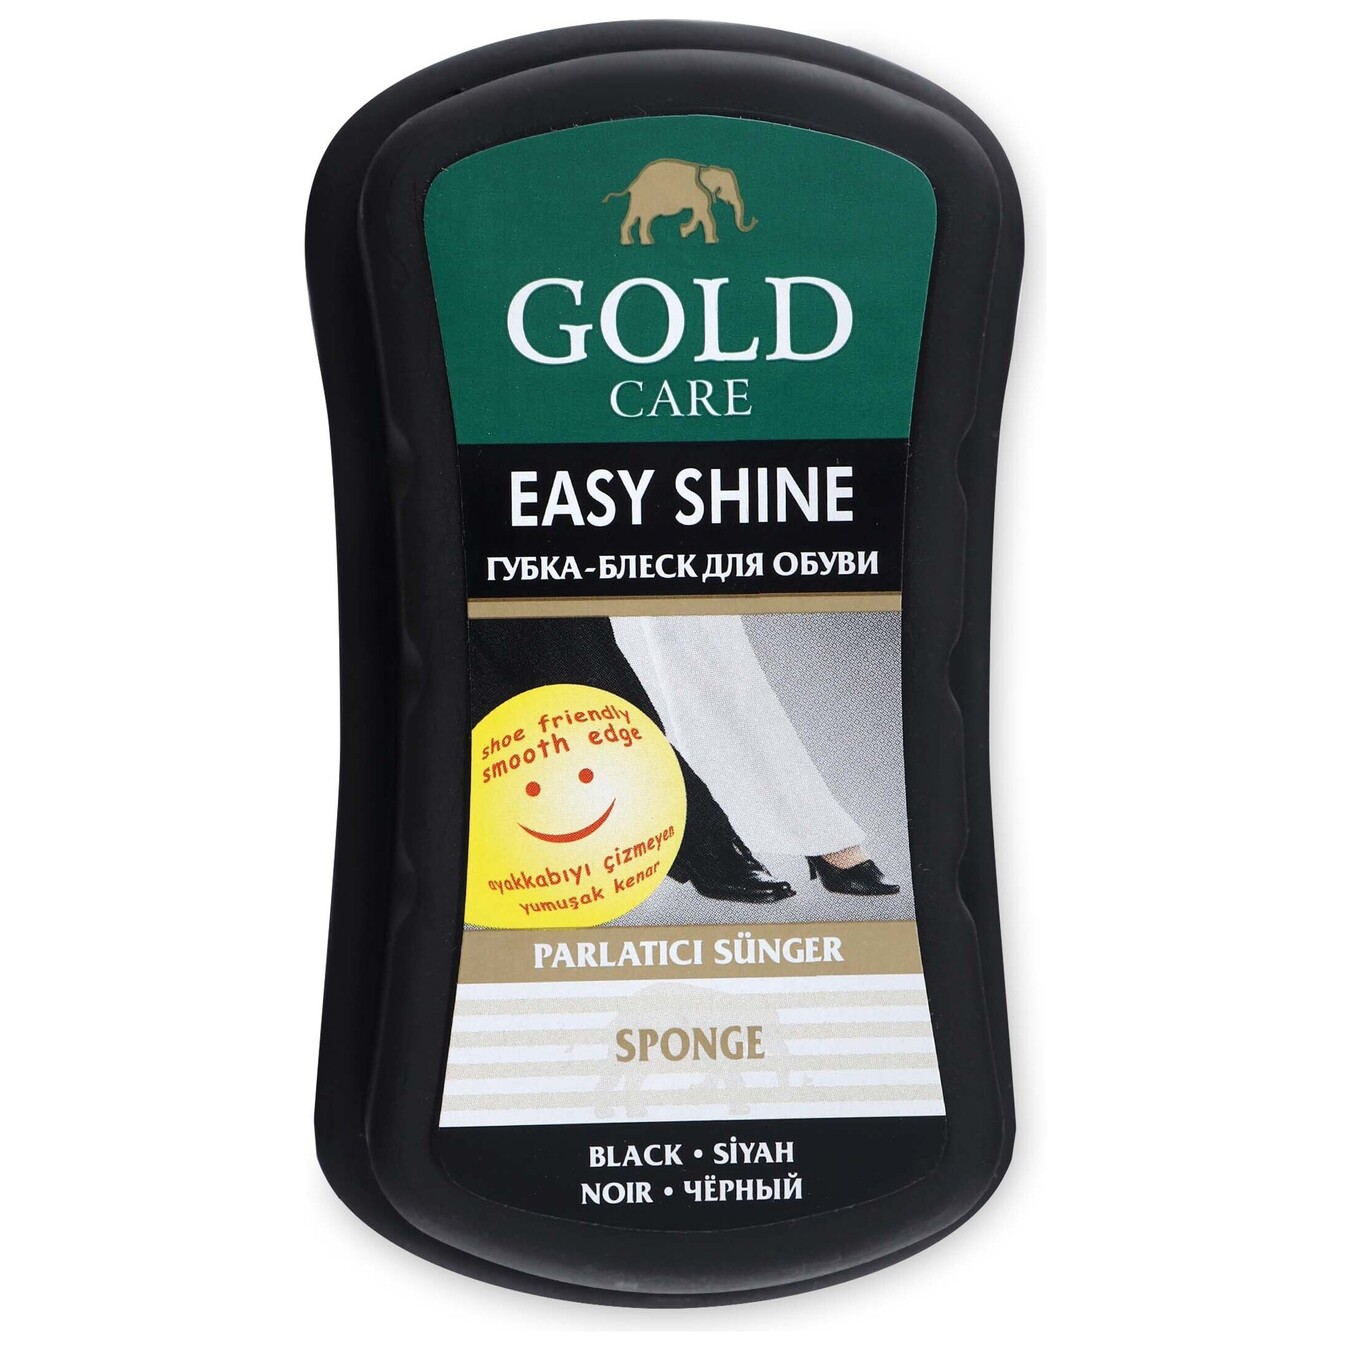 Sponge Gold Care for shining shoes black